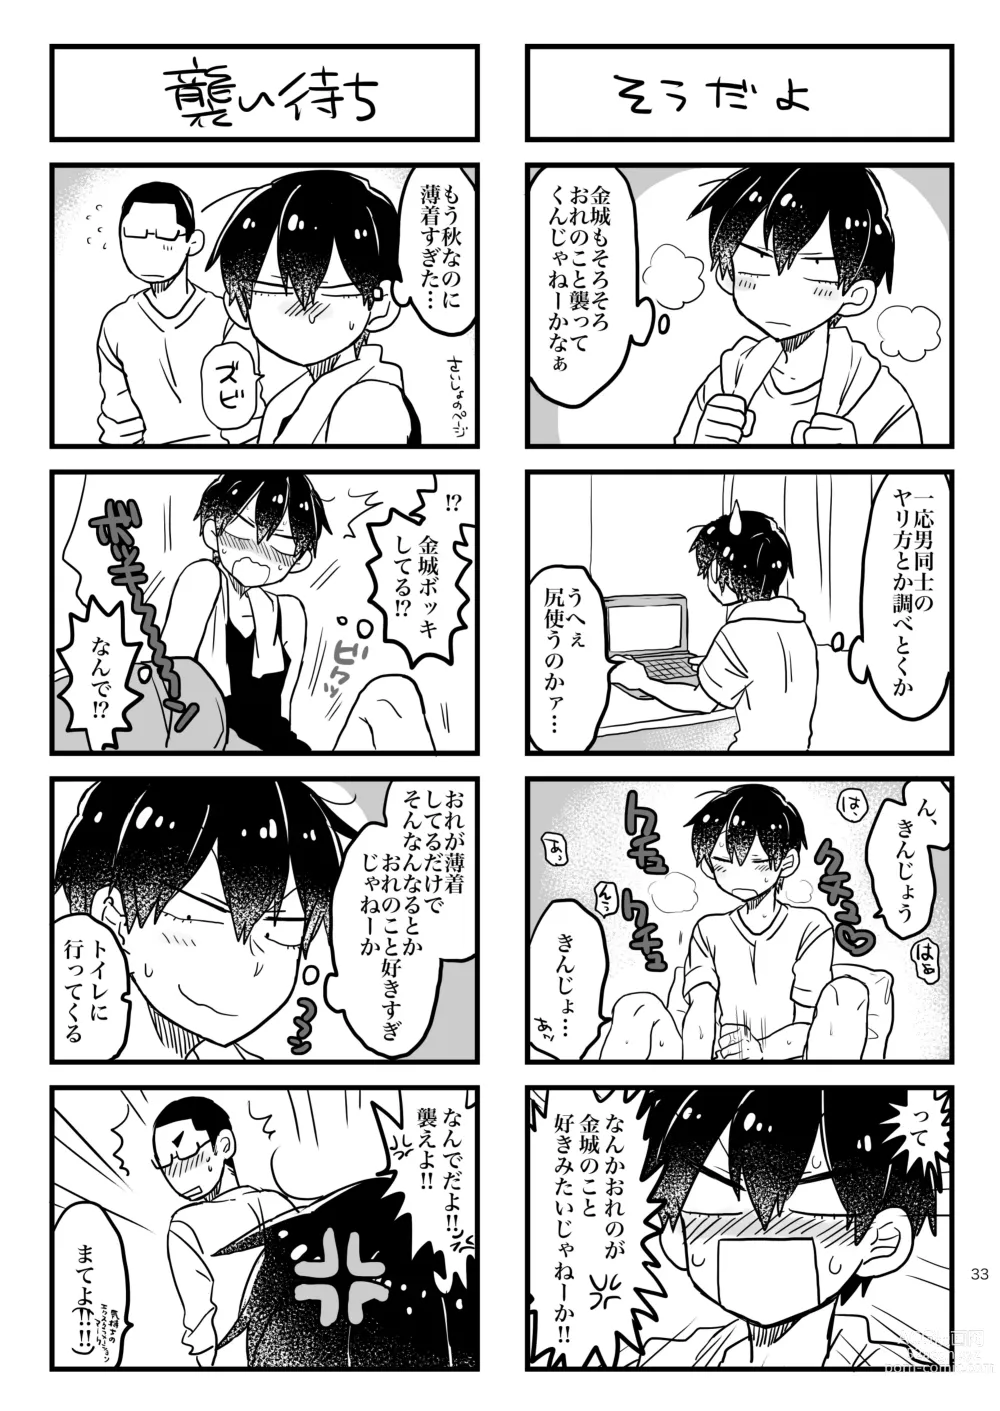 Page 31 of doujinshi Baby wo Namagoroshii!